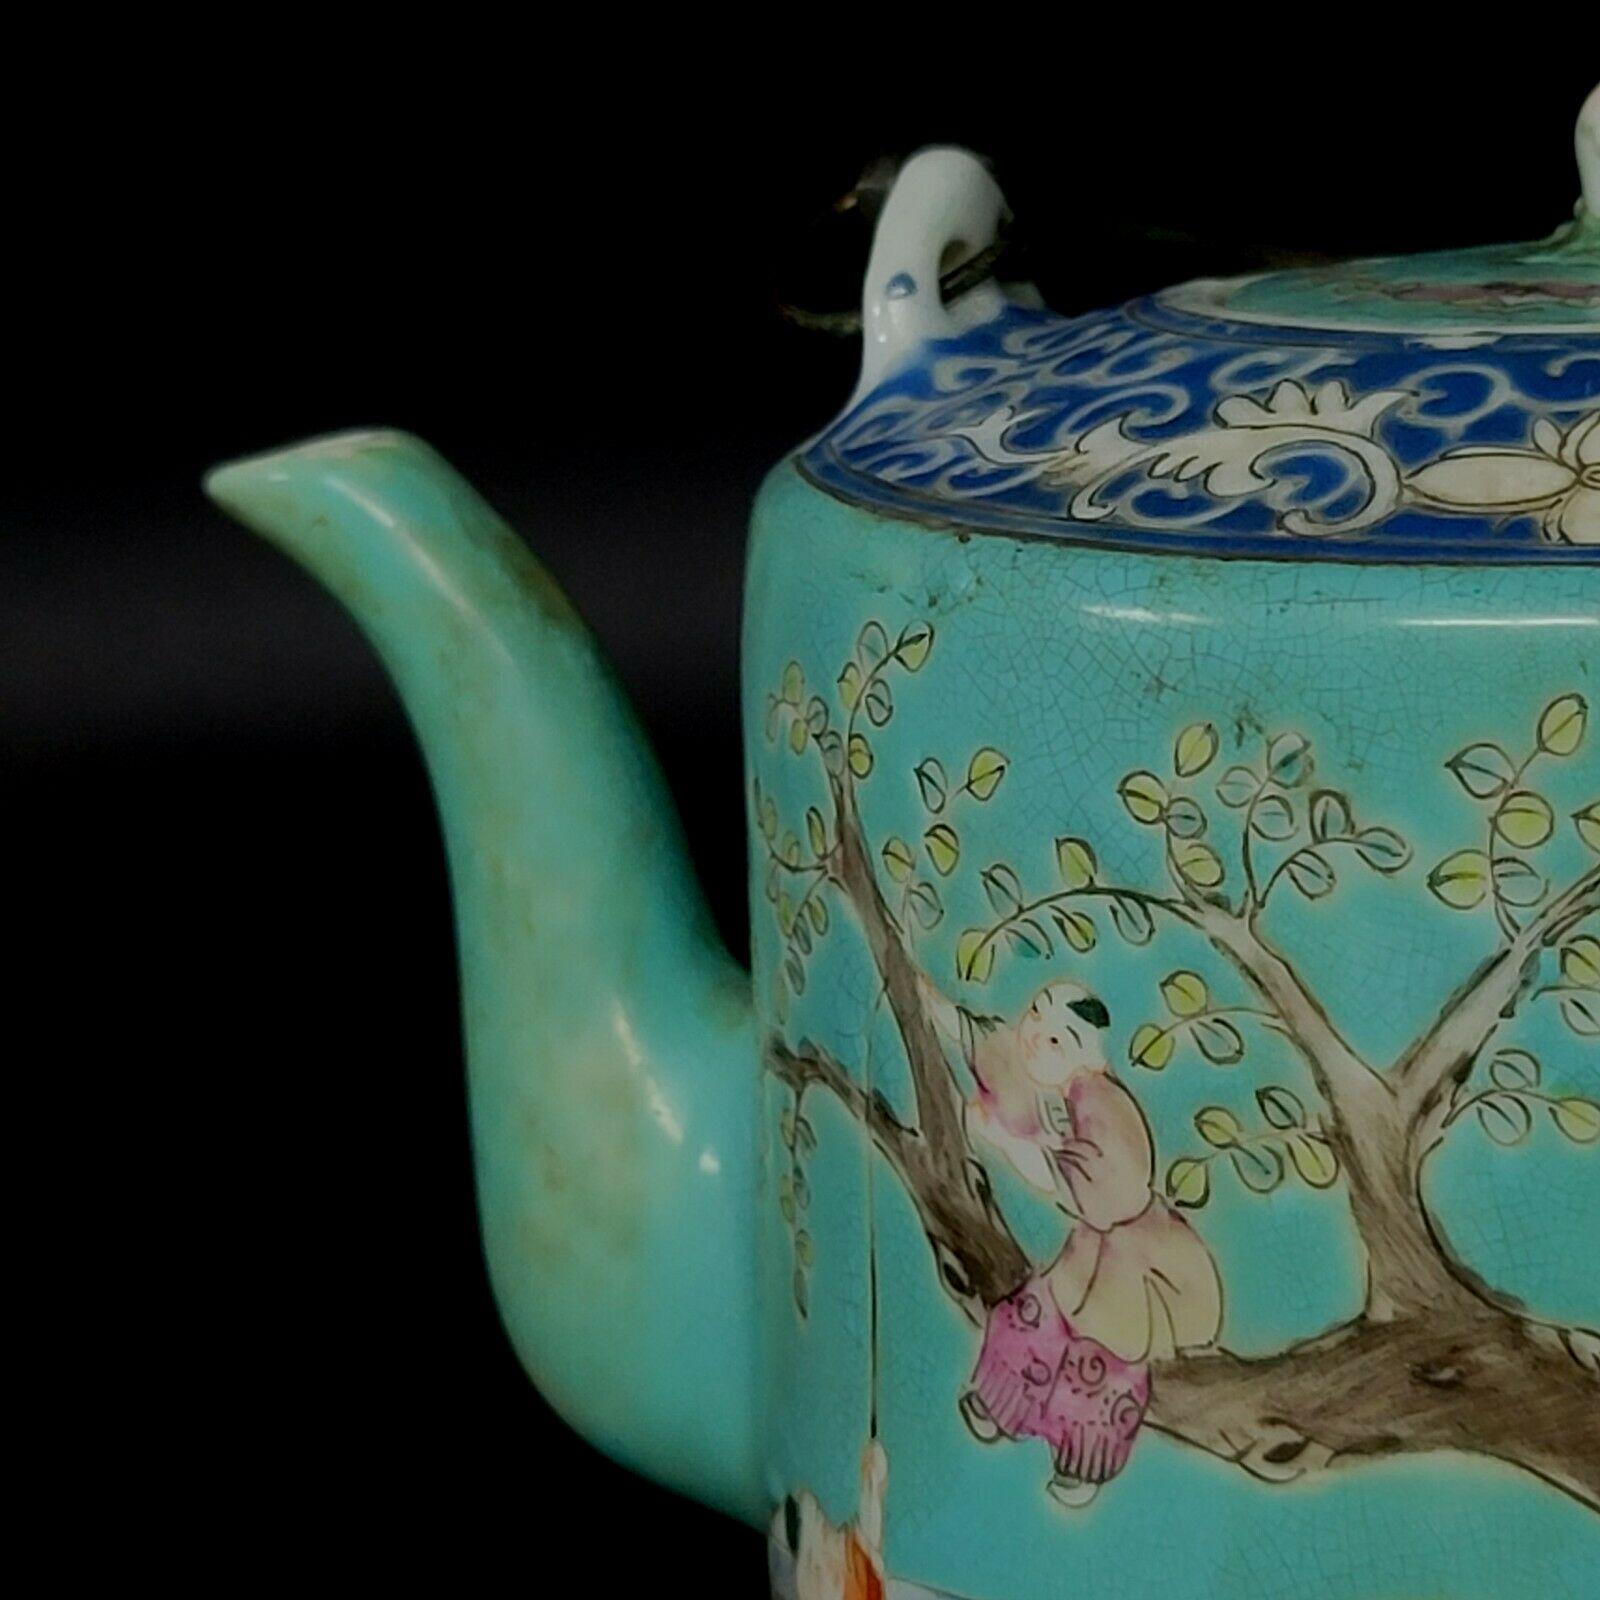 chinese tea pot antique